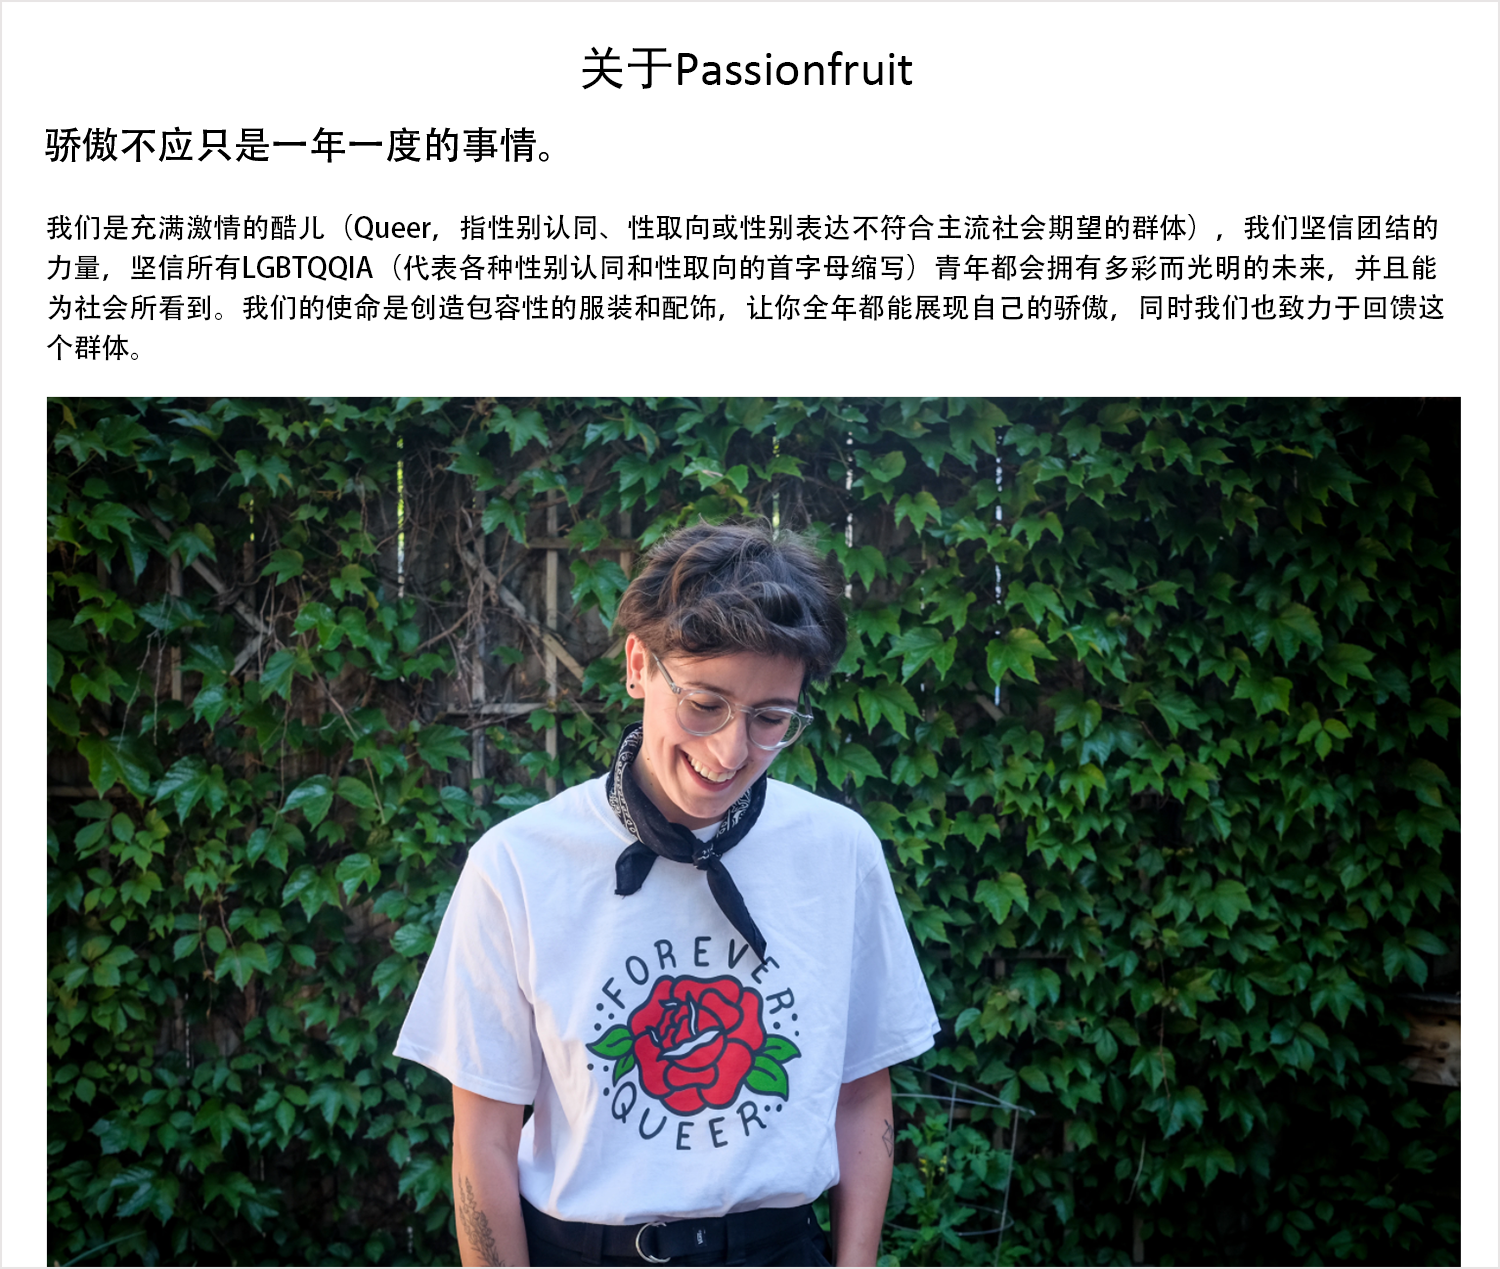 Passionfruit网站首页公司宣言